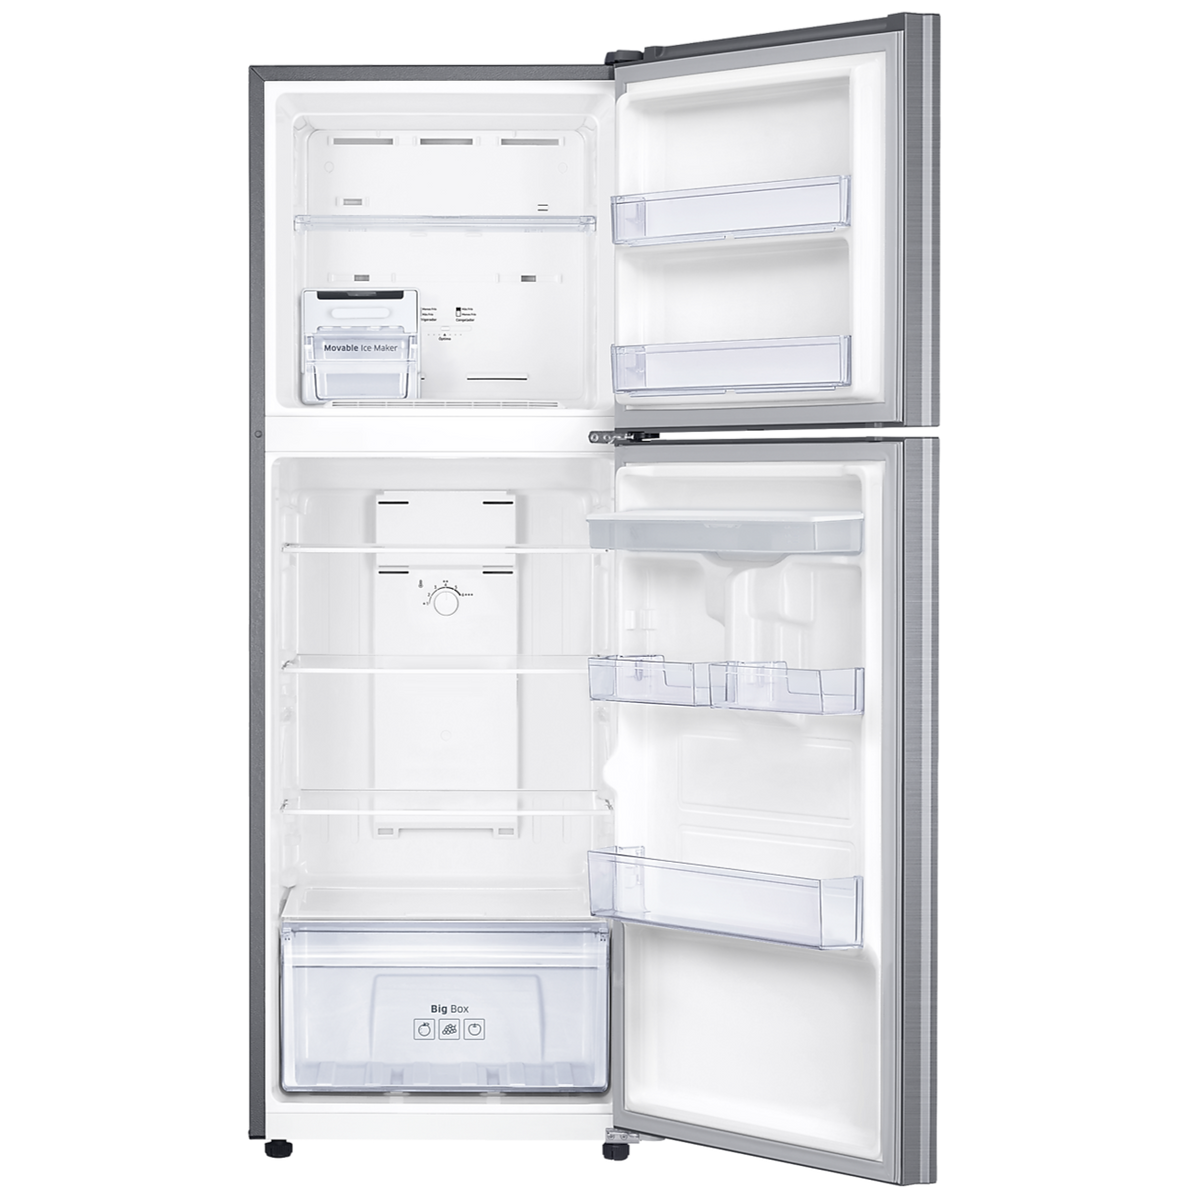 Refrigeradora Inverter Samsung RT32A571JS8 | 12 pies cúbicos | Top Mount | Color Gris